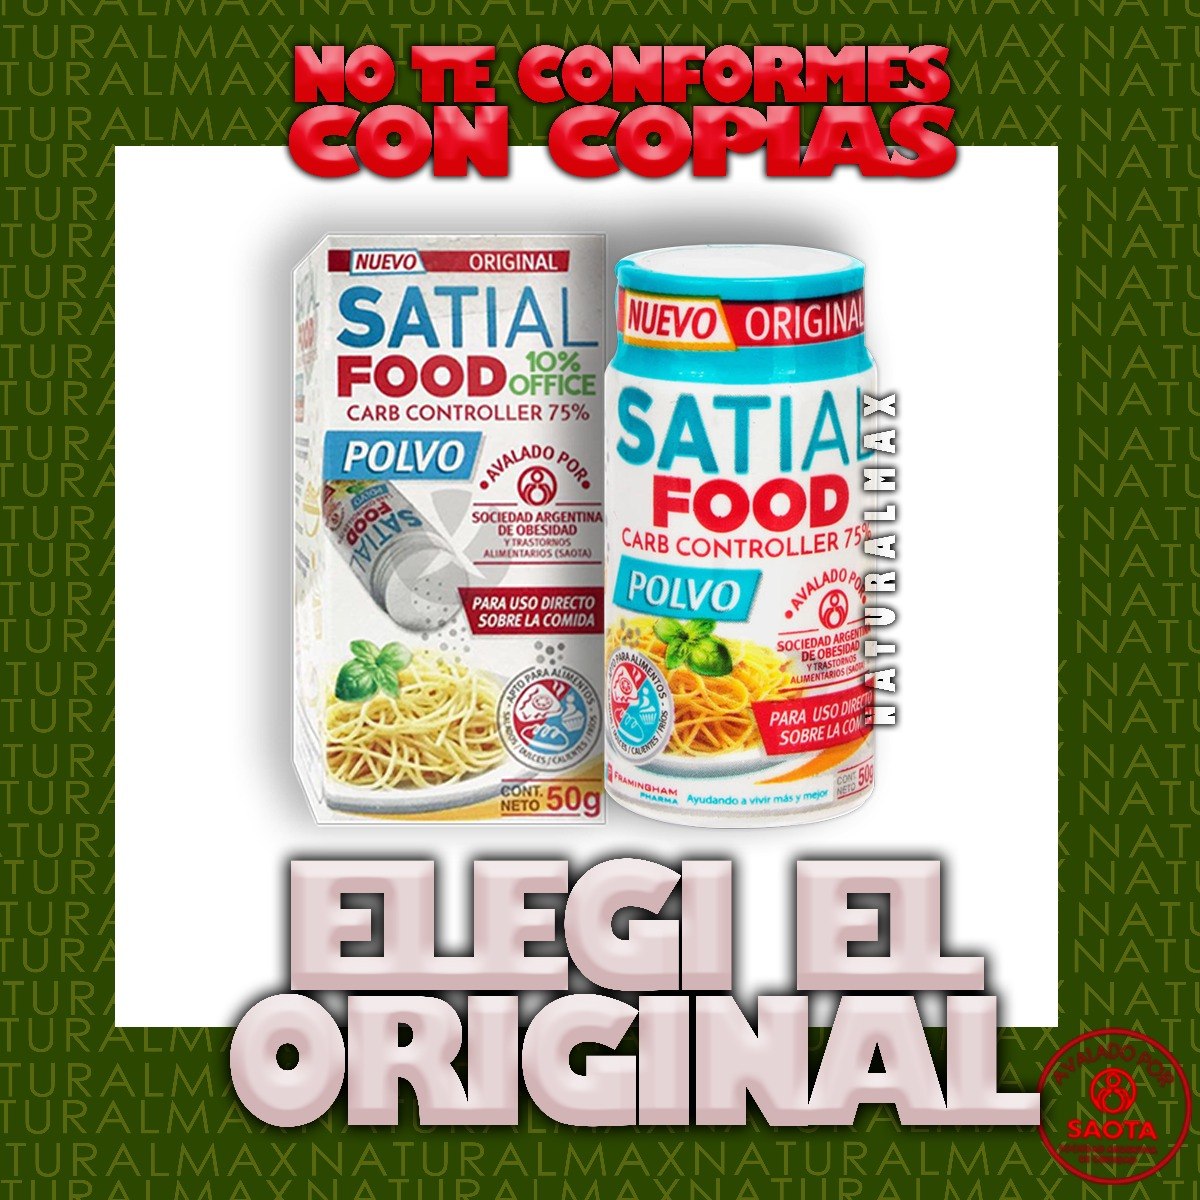 Satial Food Polvo Adelgazante Original Argentino. - $ 1 ...